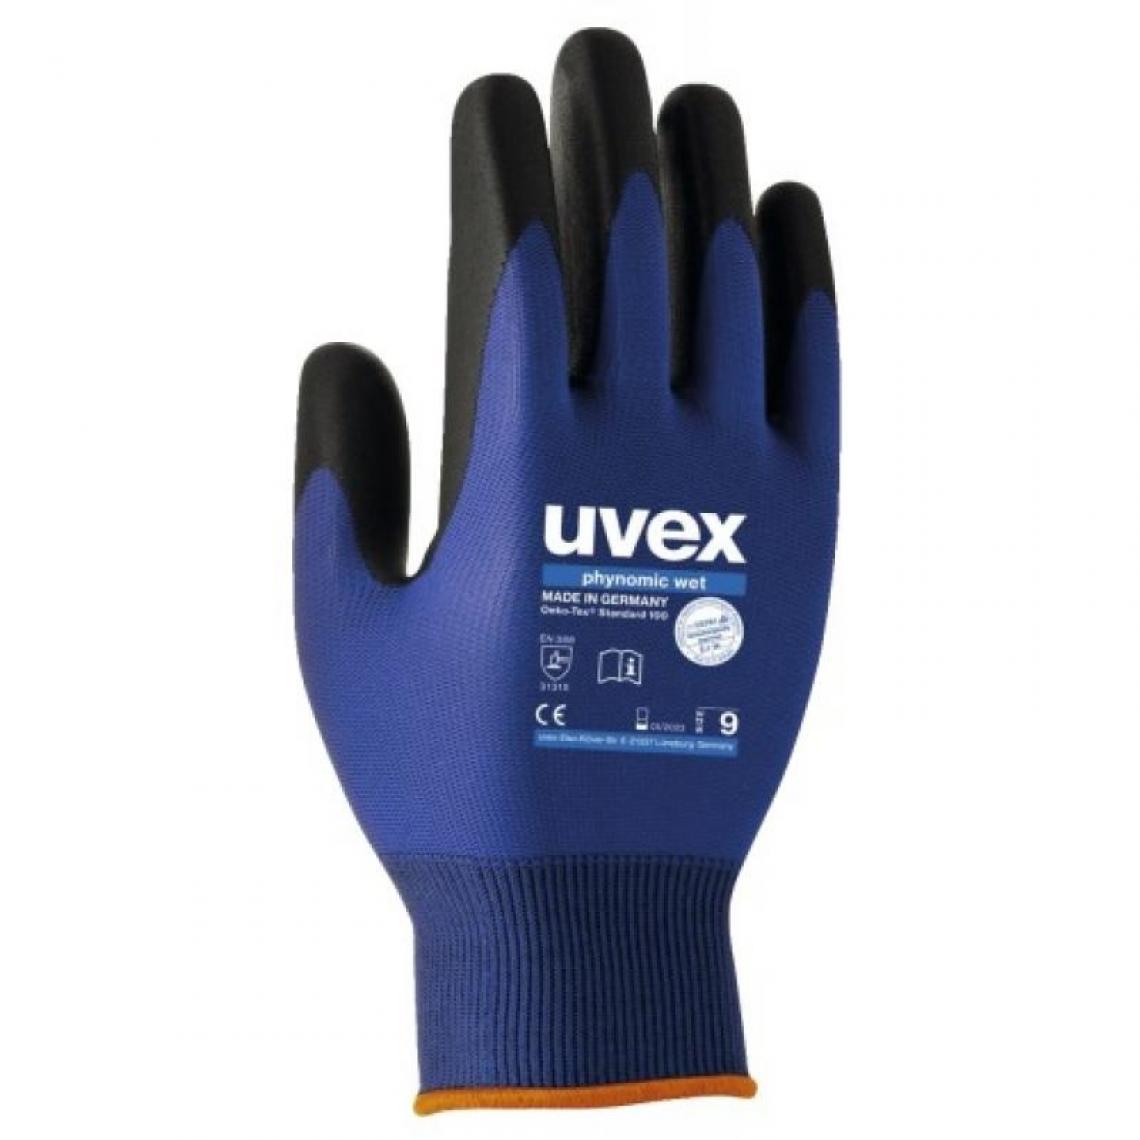 Uvex - Gants phynomic wet T10 (bt10) - Protections pieds et mains